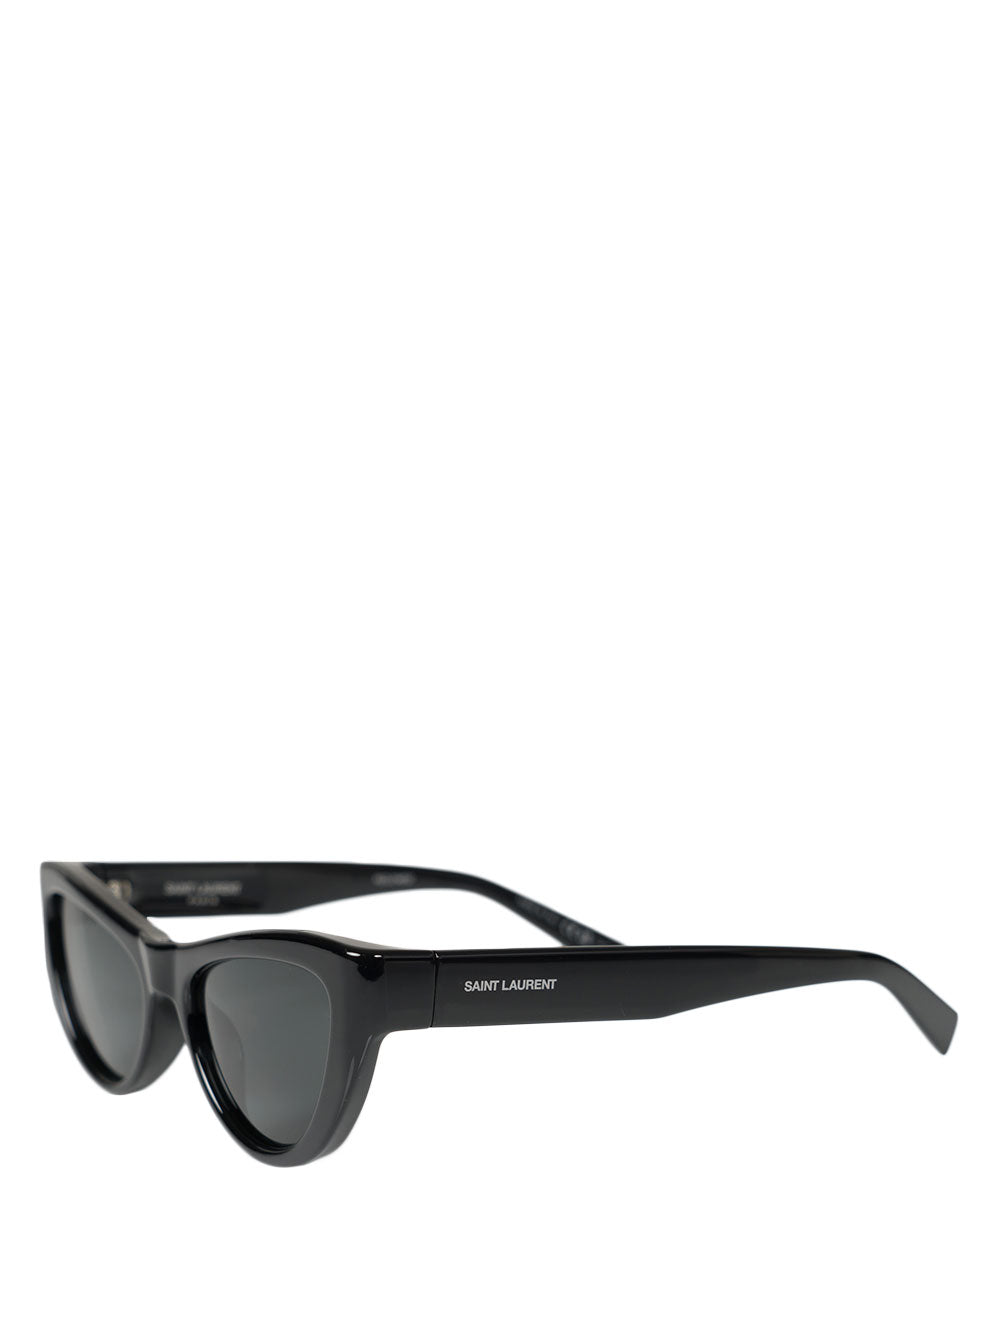 SL 676 sunglasses